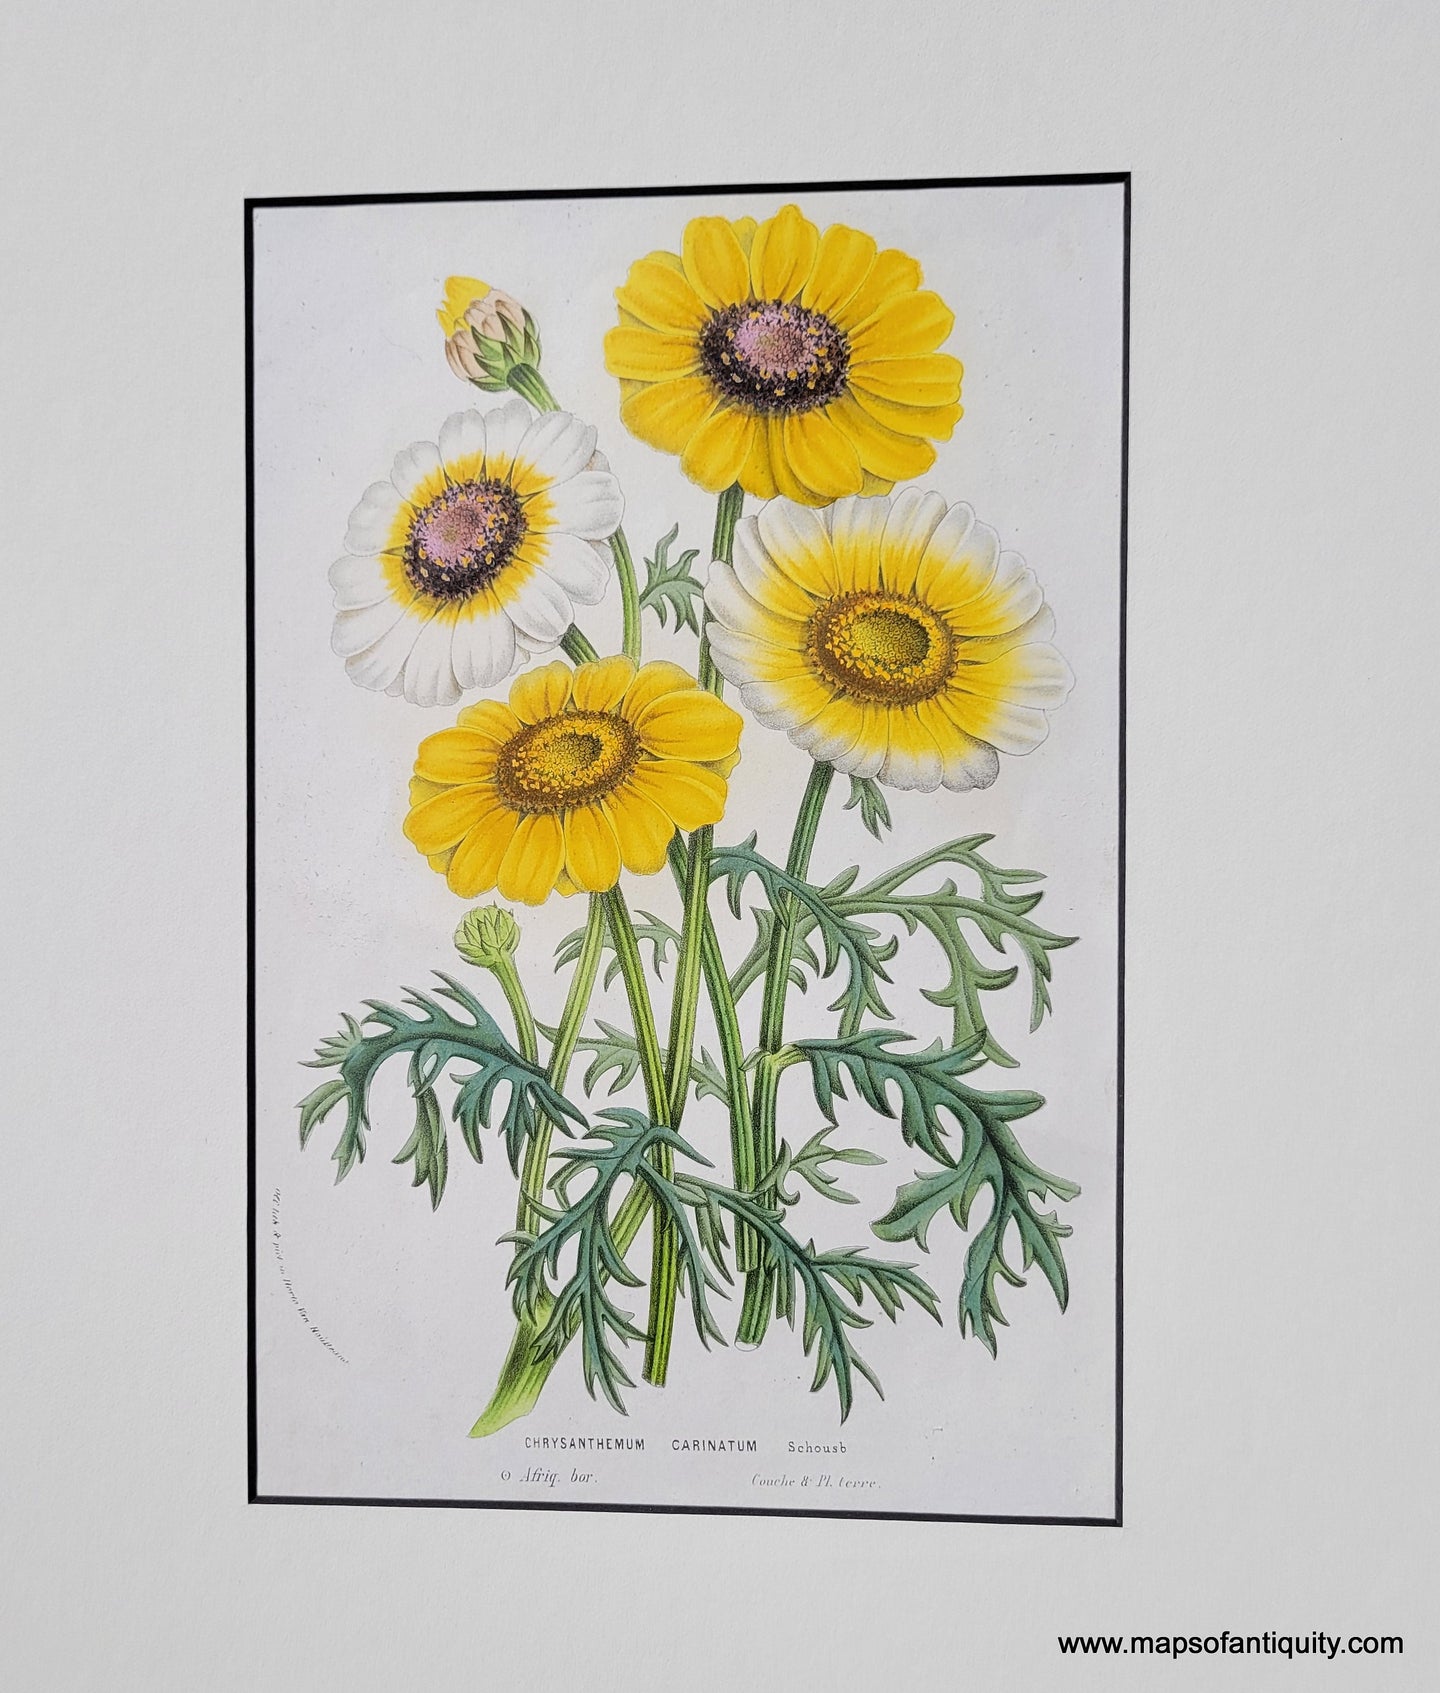 Genuine-Antique-Print-Painted-Daisy-Chrysanthemum-carinatum-1850-Van-Houtte-Maps-Of-Antiquity